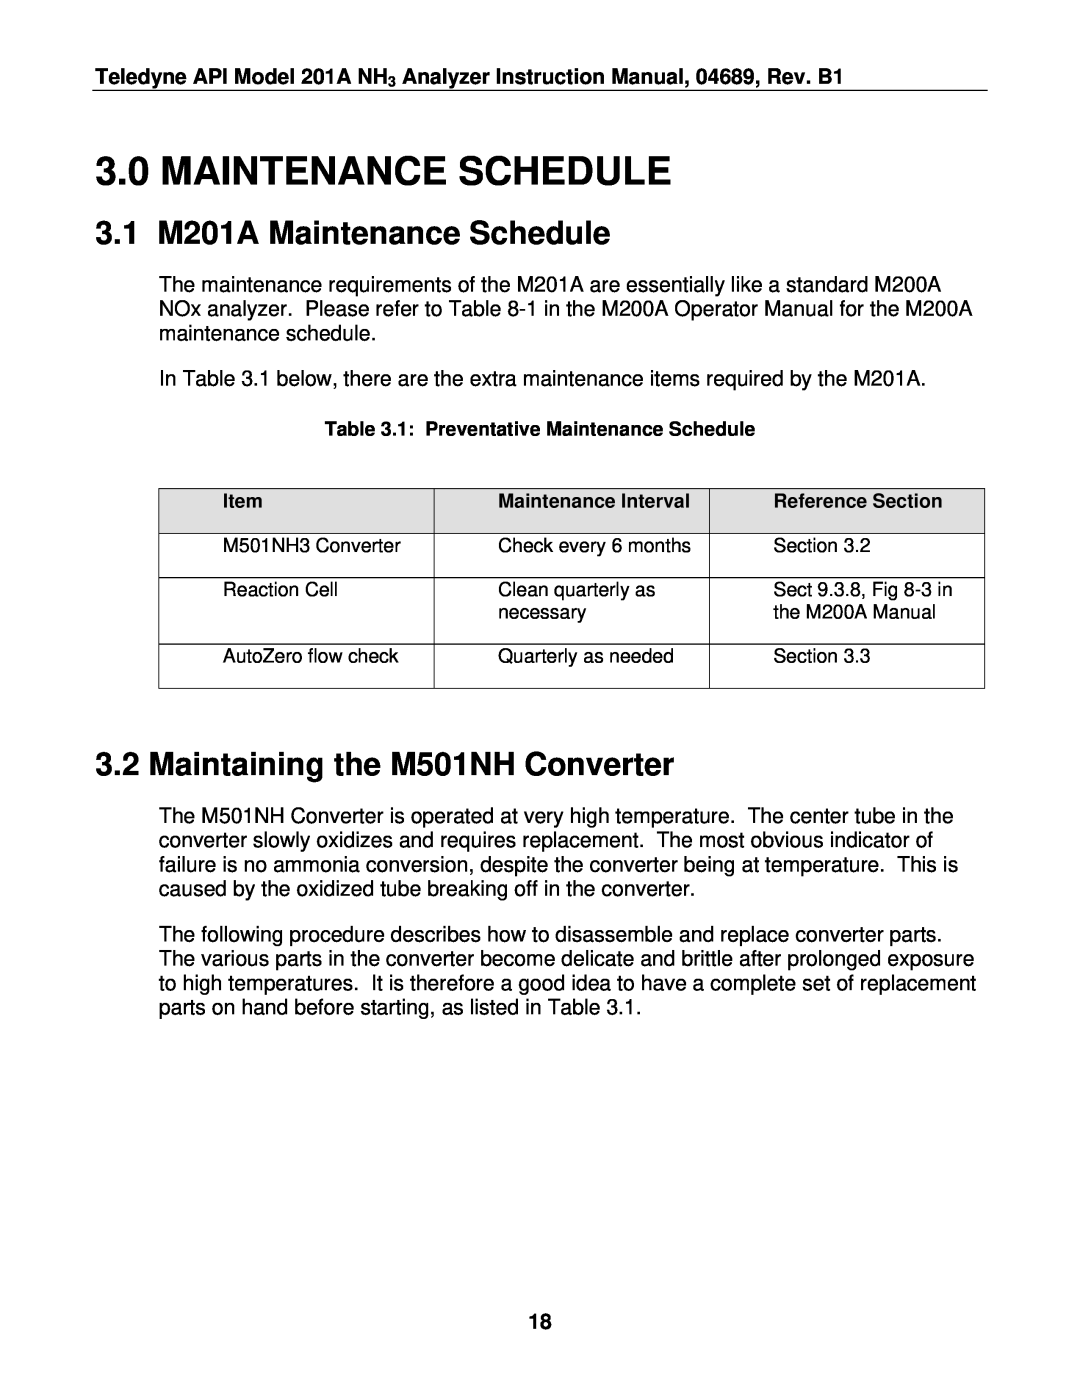 Teledyne manual 3.0MAINTENANCE SCHEDULE, 3.1M201A Maintenance Schedule, Maintaining the M501NH Converter 